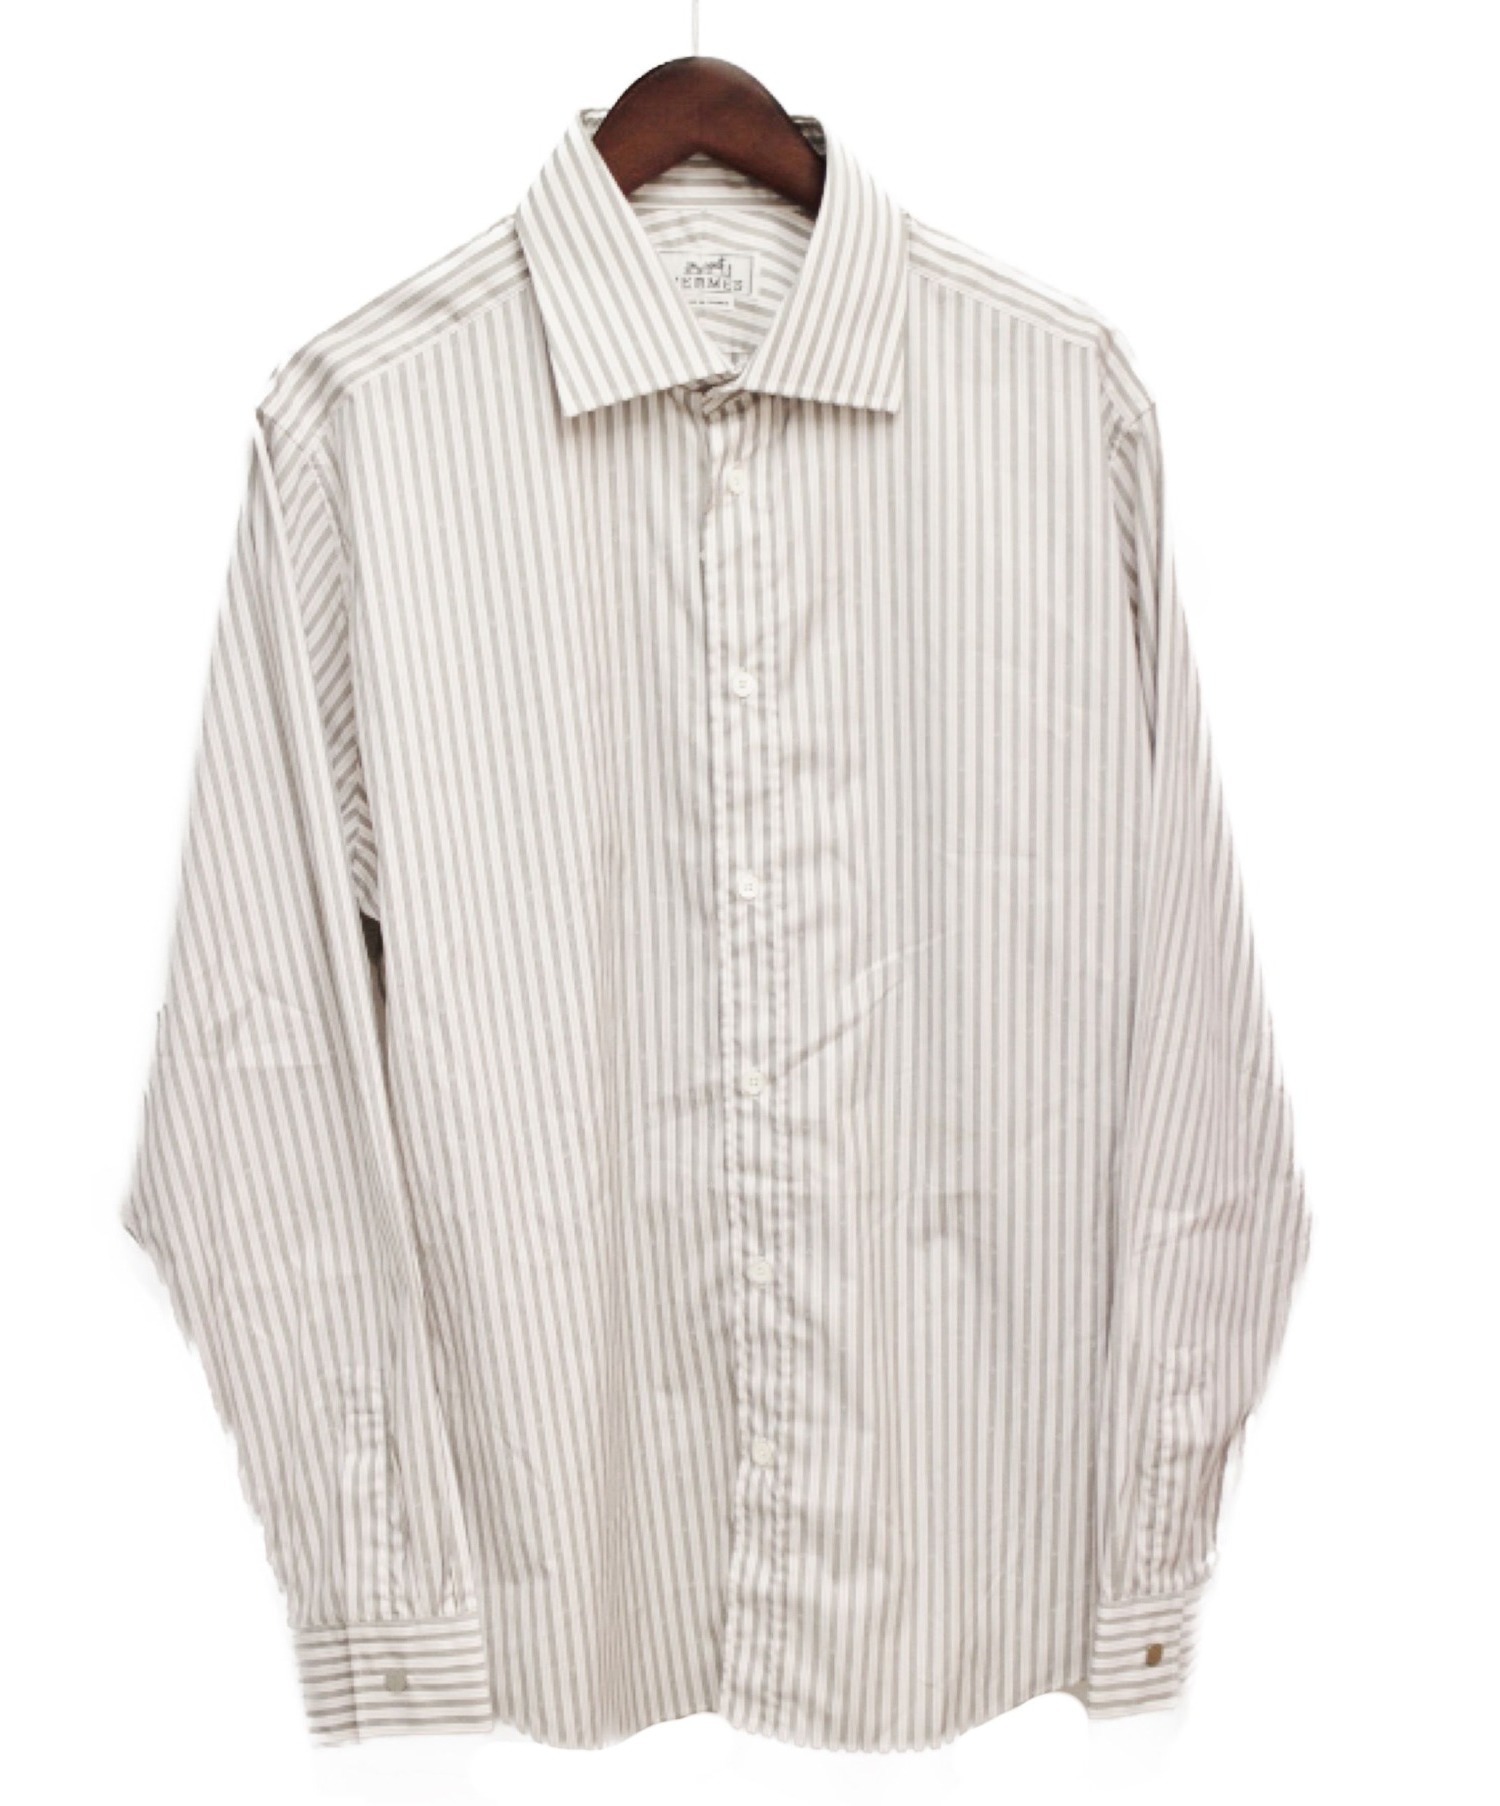 HERMES (エルメス) ストライプシャツ ホワイト×グレー サイズ:42 未使用品